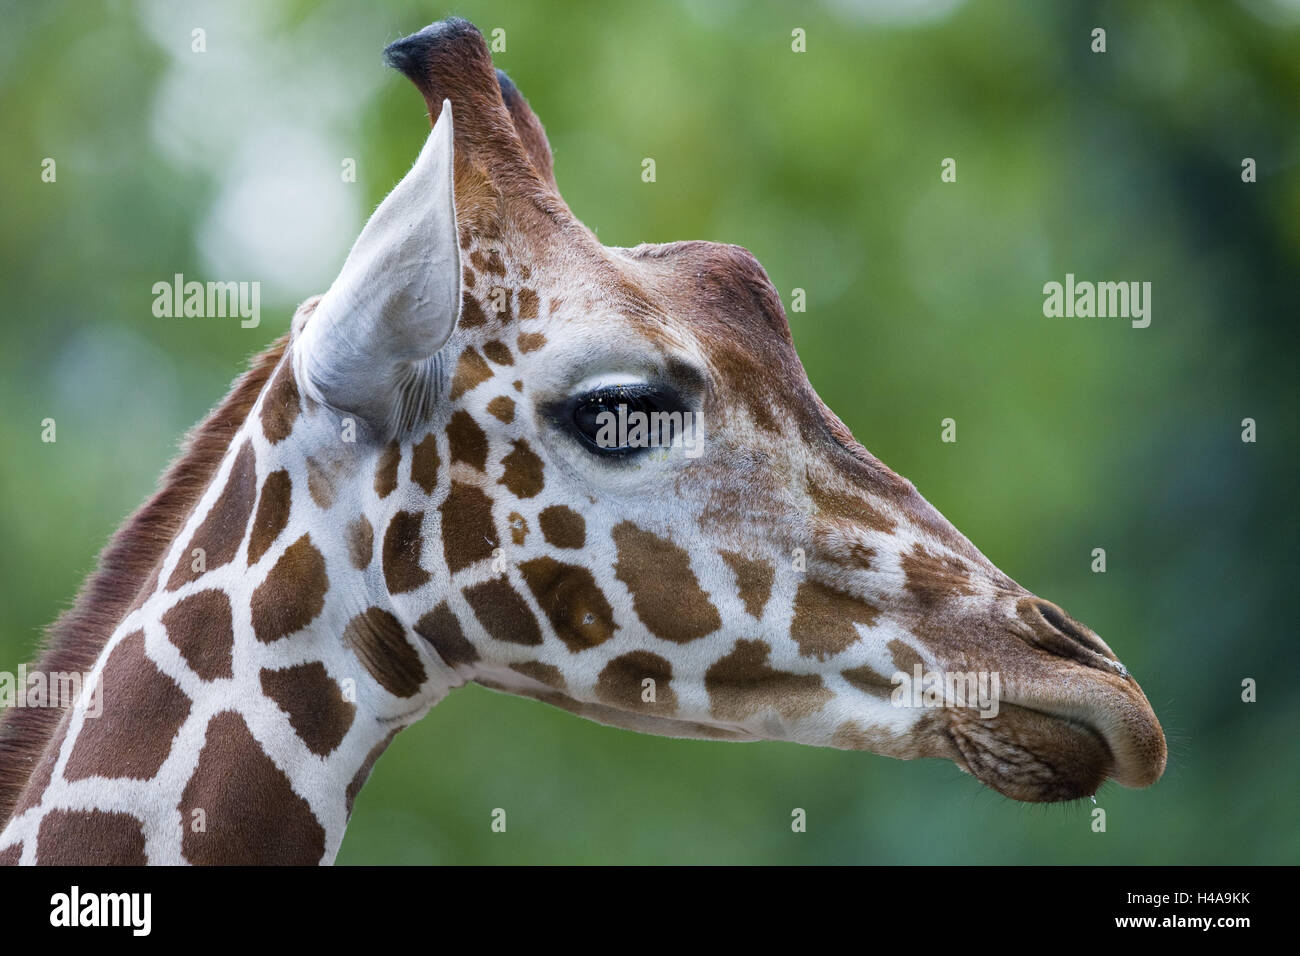 Netzwerk-Giraffe, Giraffe Giraffa Reticulata, Lauffläche, wildes Tier, Tier, Säugetier, Tier Klauentieren, lange Hals Giraffe, Giraffe, individuell, Fell, Probe, tierische Porträt, Zoo-Tier, Zoo, Gefangenschaft, Stockfoto